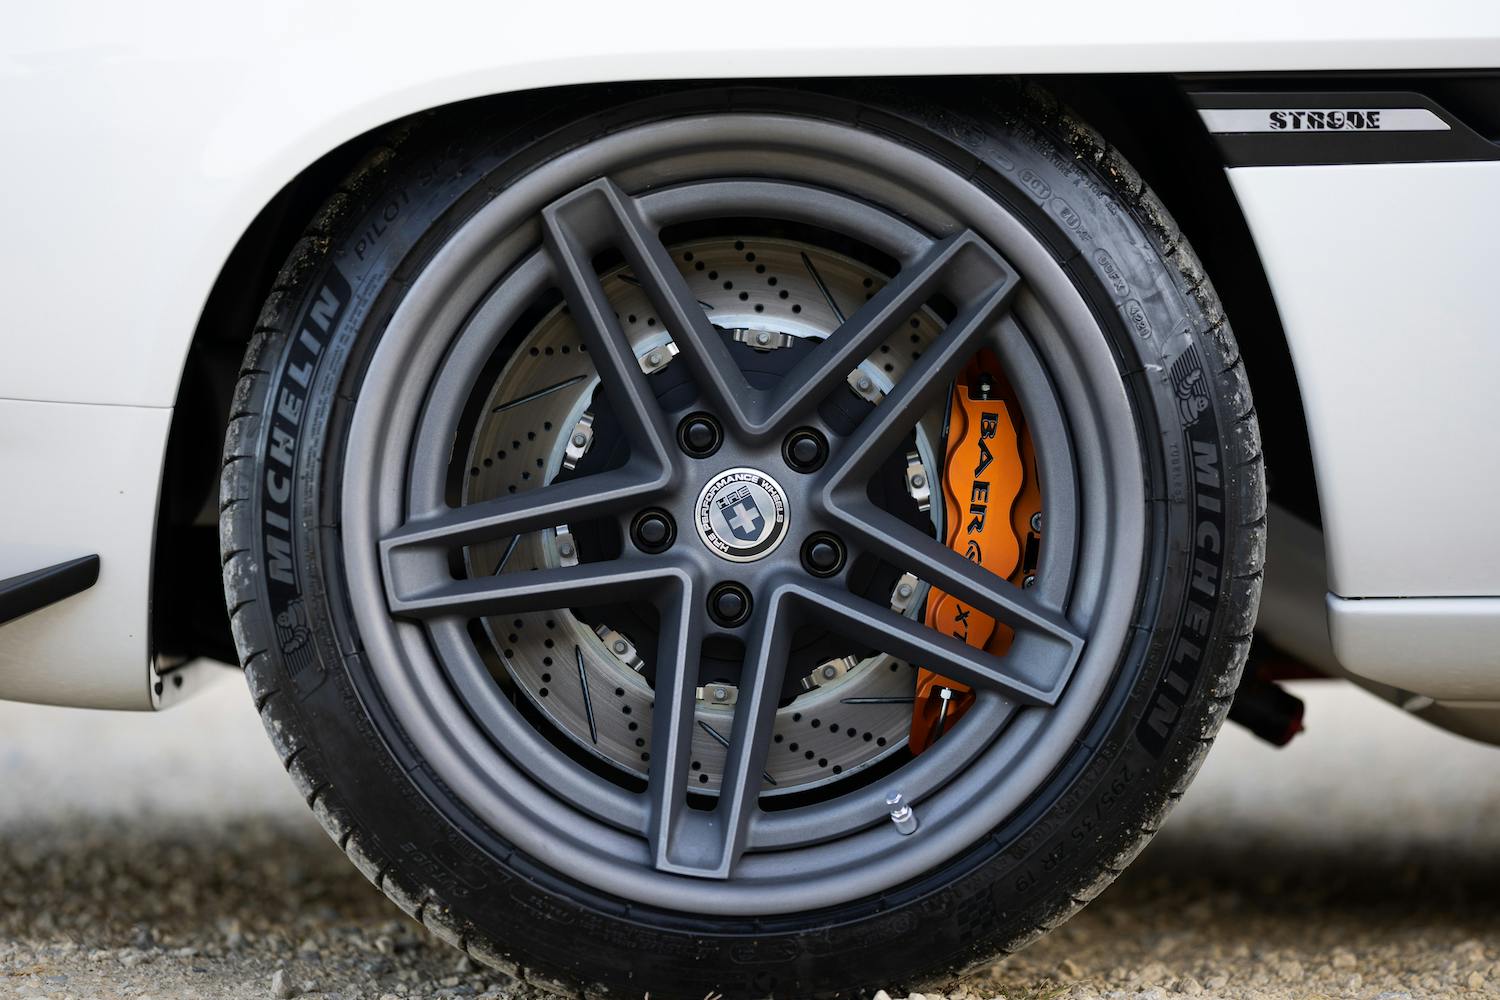 Strode 1969 Chevy Camaro wheel tire brakes